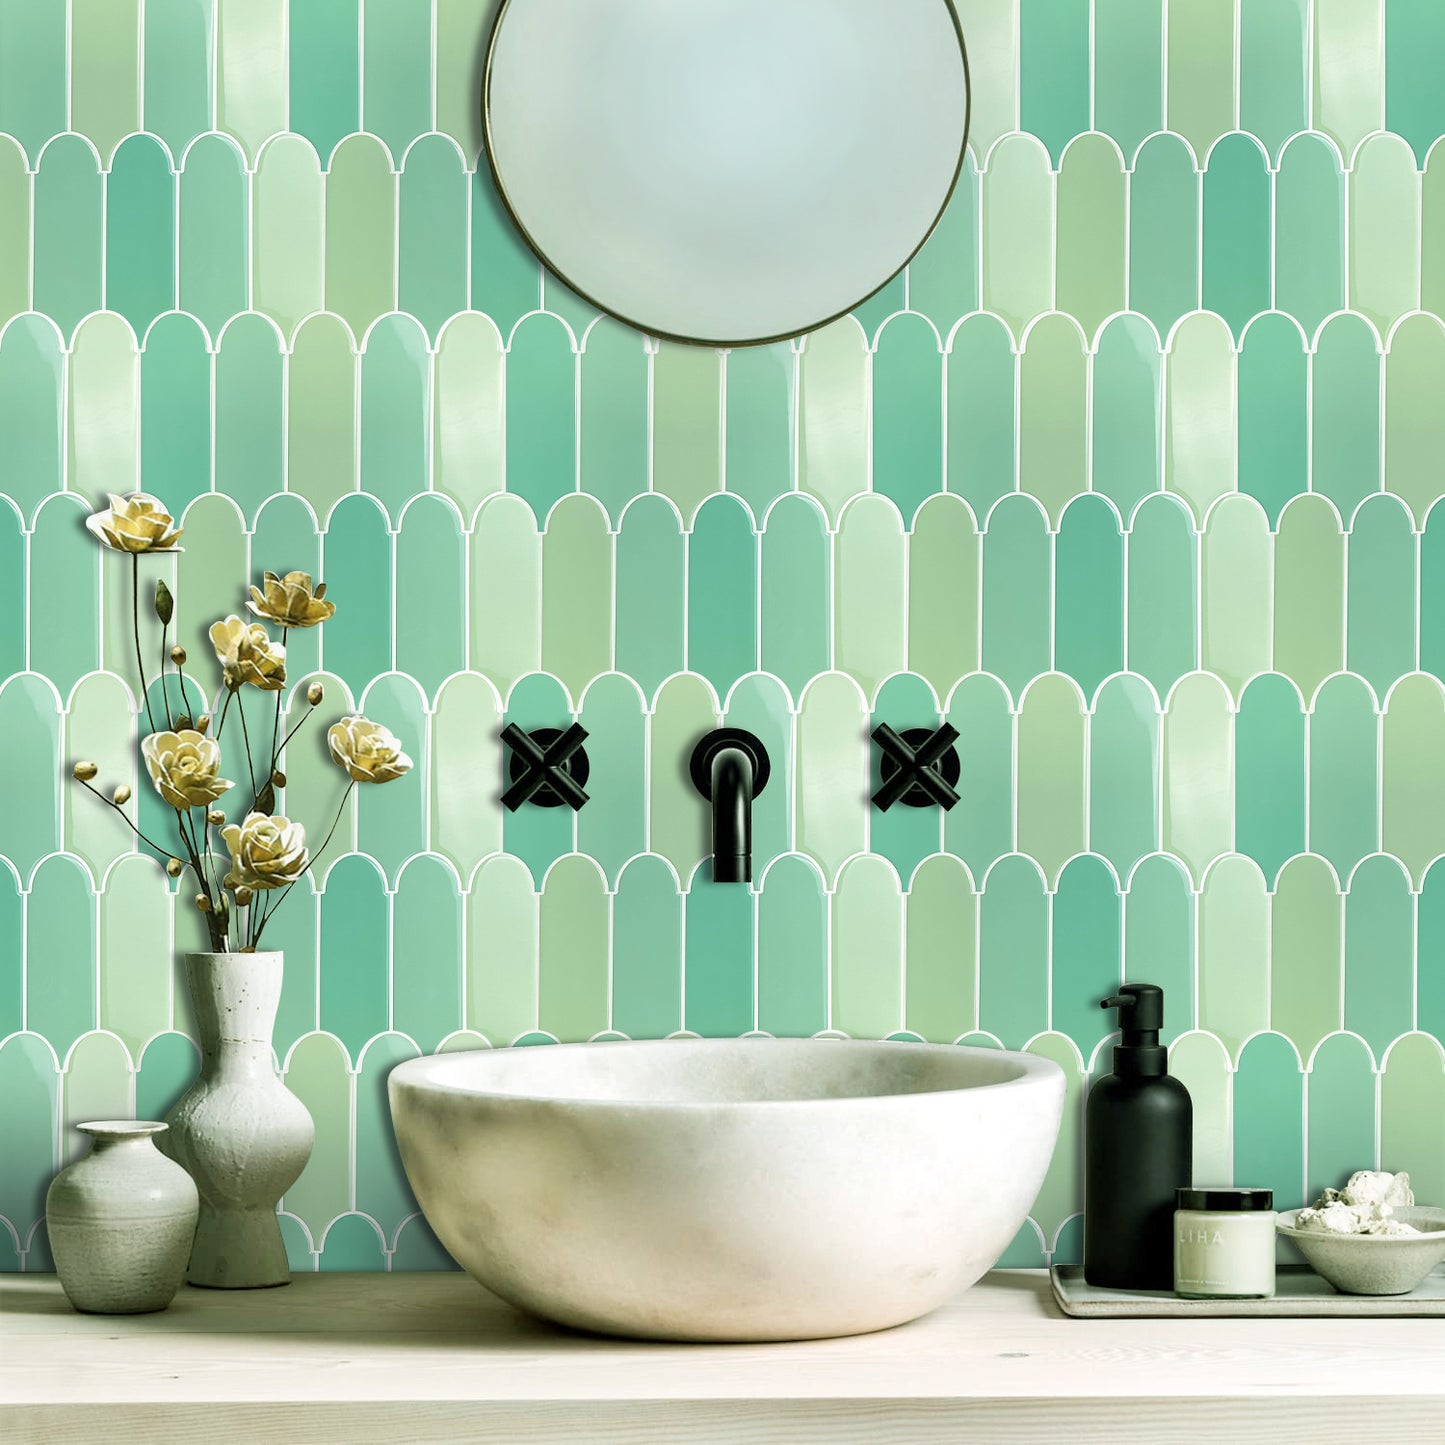 10-Sheet Mosaic Tiles Peel and Stick Backsplash Kitchen  2.5mm Thicker Design - Jade